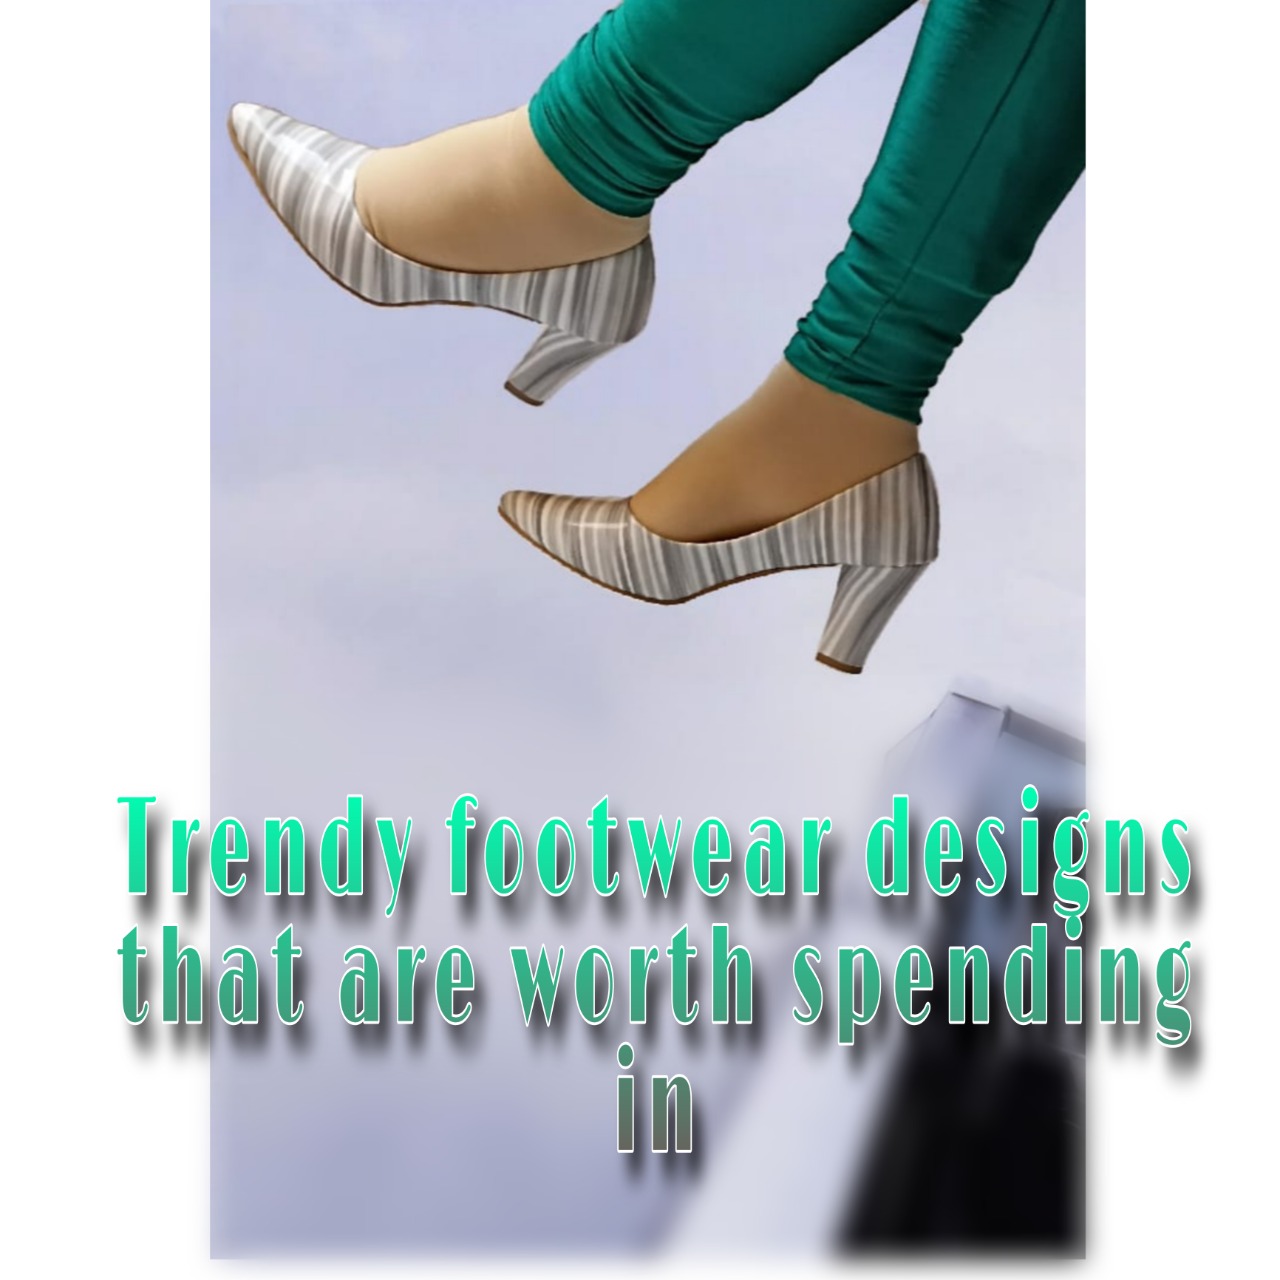 Trendy footwear designs that are worth spending in